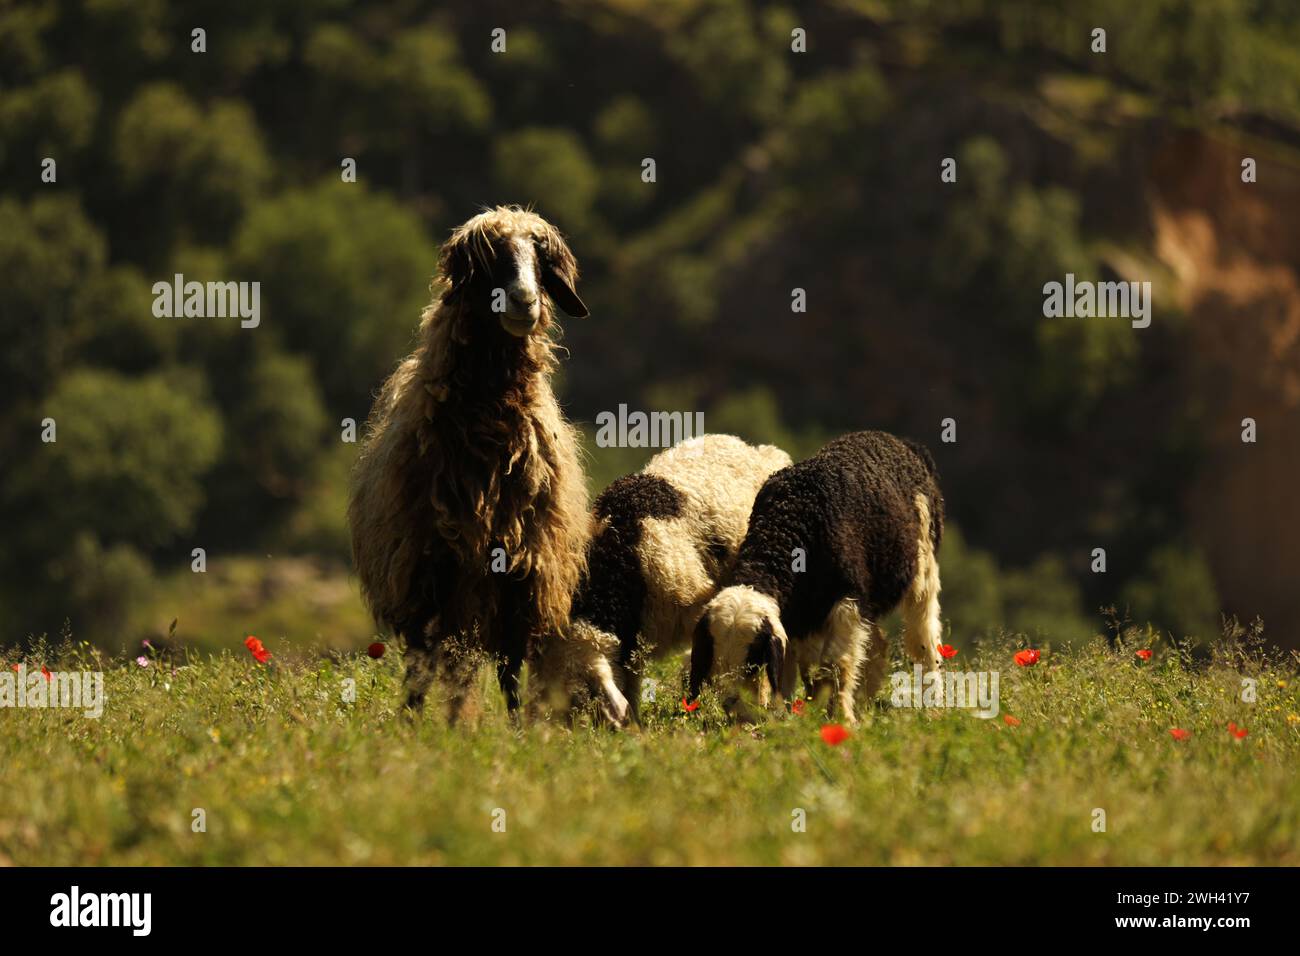 A curious ewe stands guard, her gaze meeting mine, as her playful offspring nibble on tender grass. Stock Photo